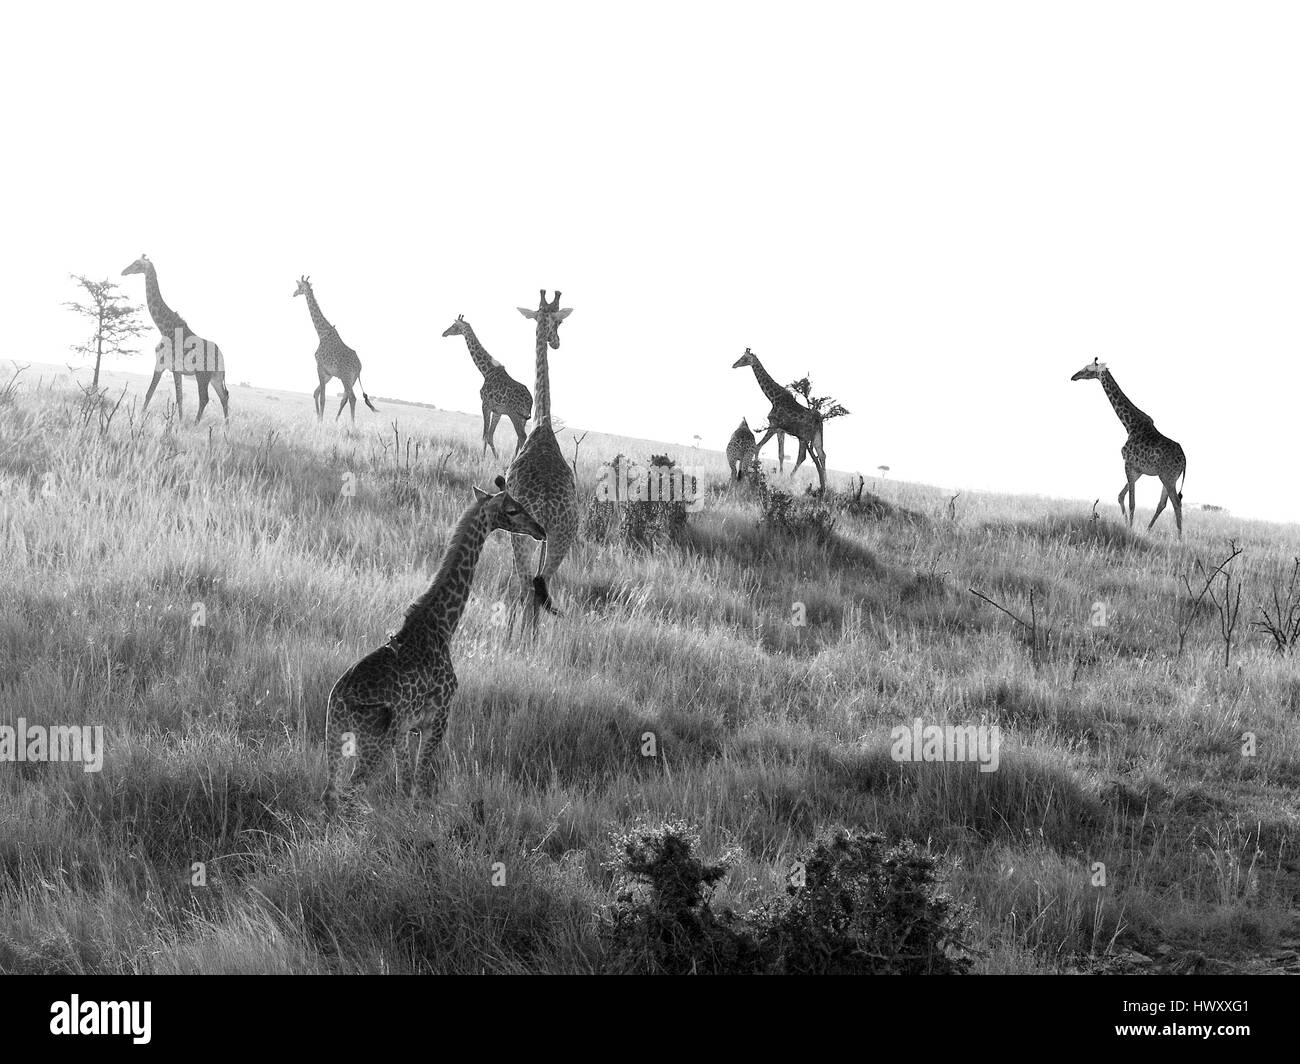 At dusk, Giraffe make their way up from the Orok River crossing onto grassland in the Olare Orok Conservancy, Maasai Mara, Kenya Stock Photo